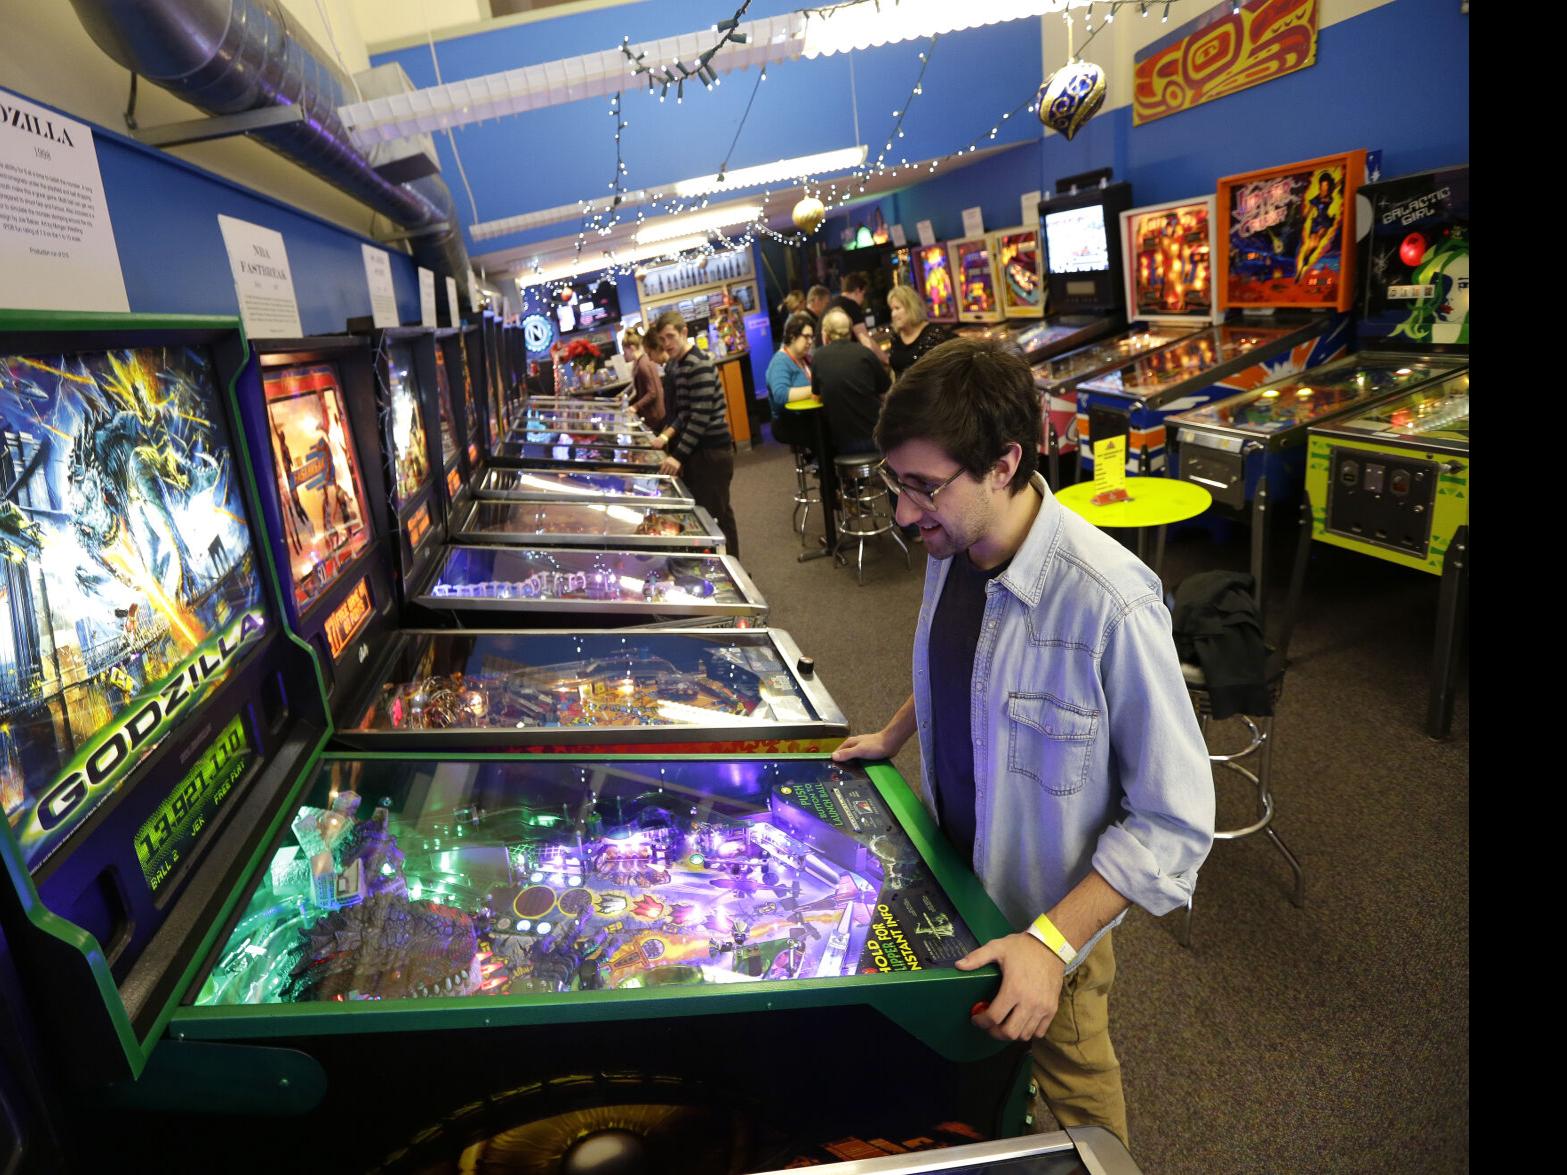 Pinball museum comes to Kentucky